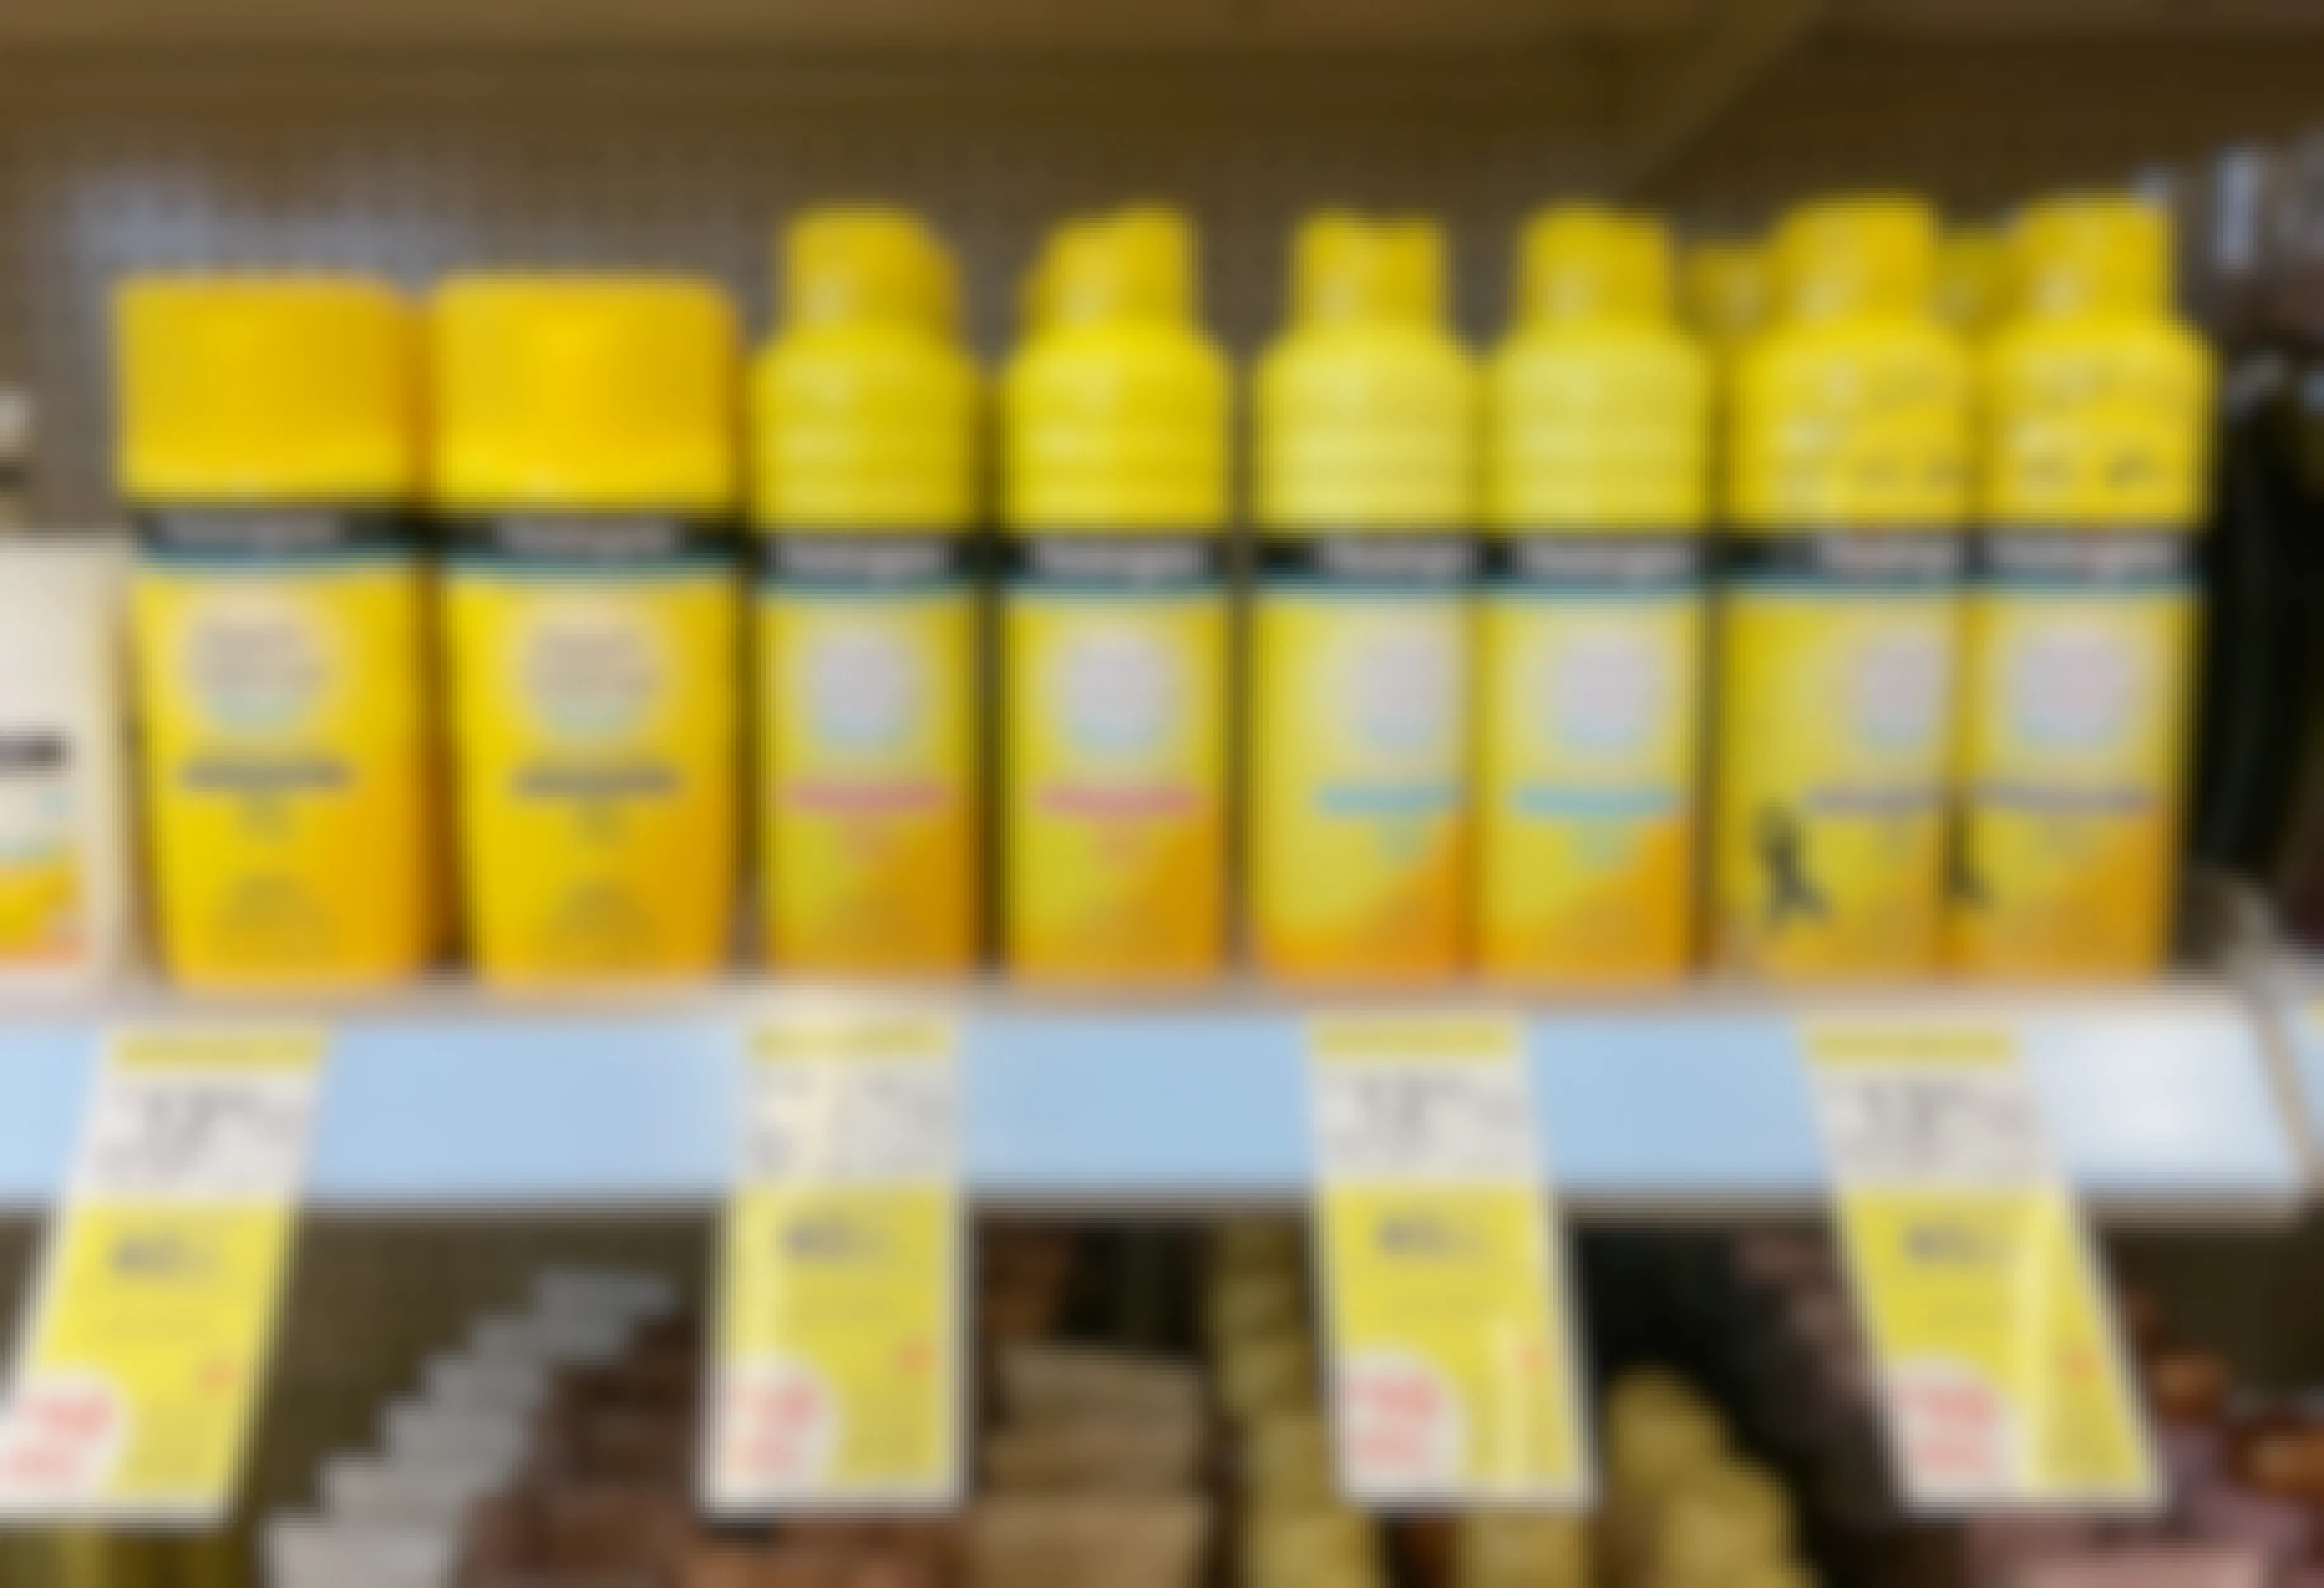 walgreens neutrogena sunscreen beach defense spray on a shelf with sale tags